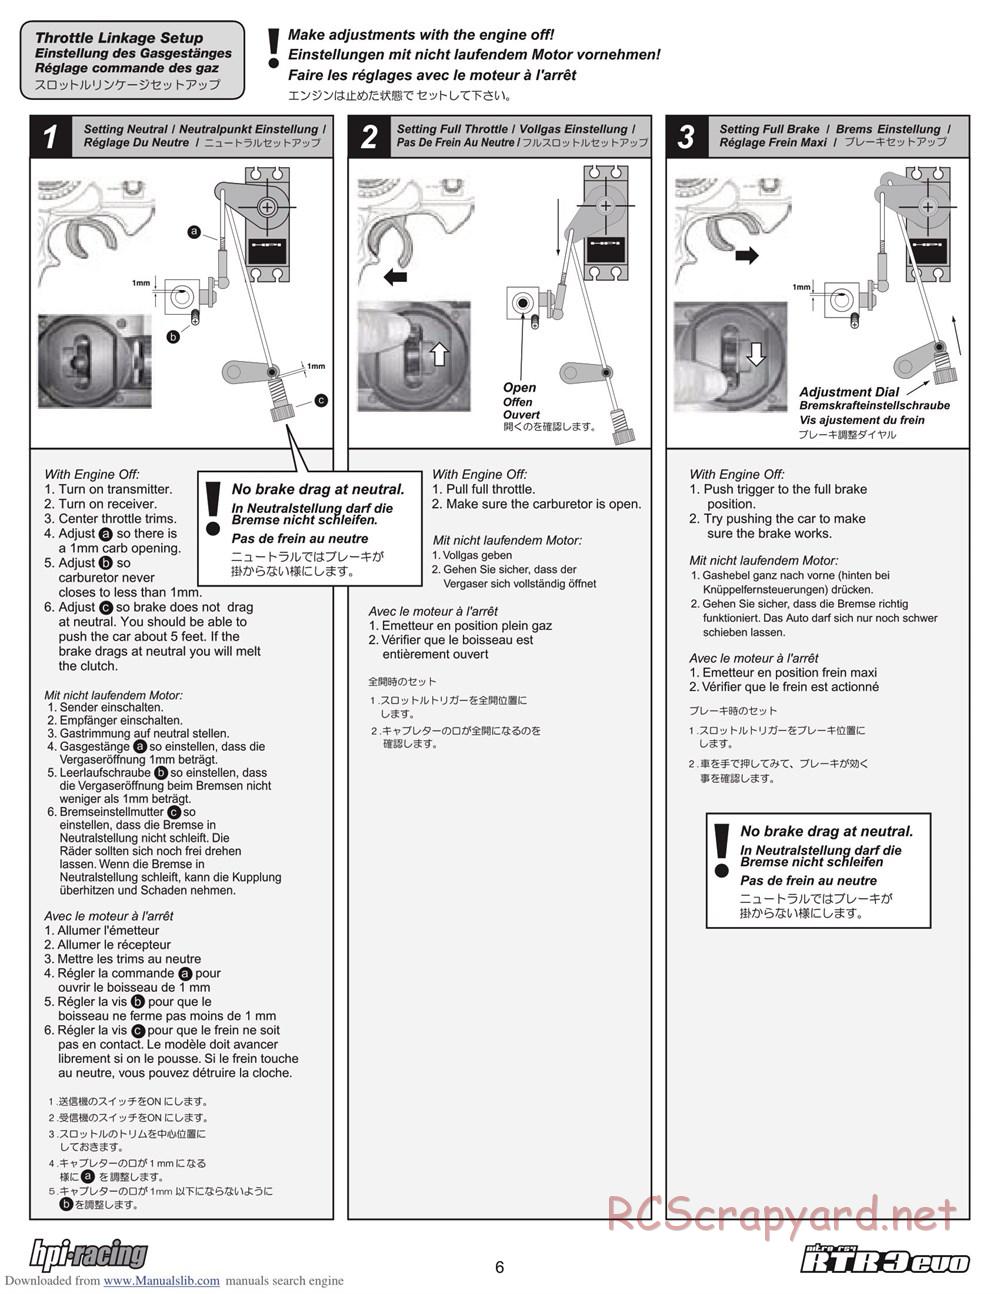 HPI - Nitro RS4 3 Evo - Manual - Page 6